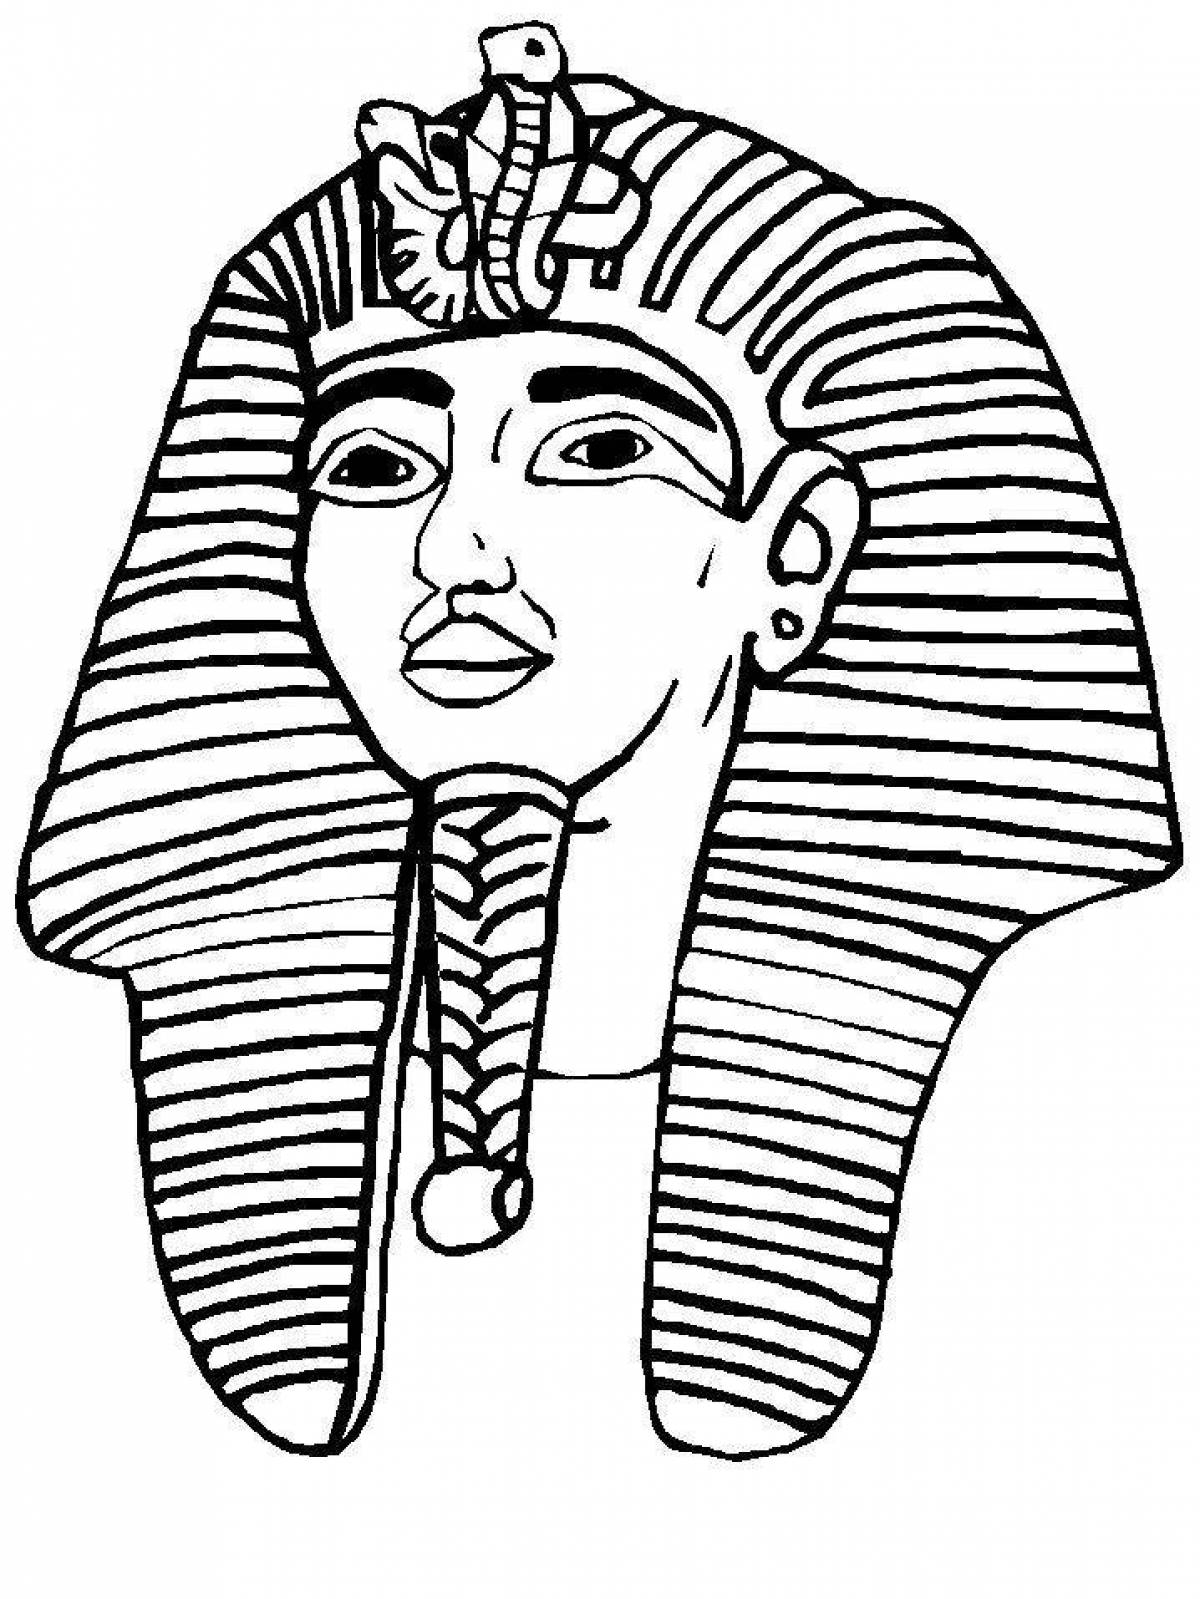 Glowing pharaoh coloring page